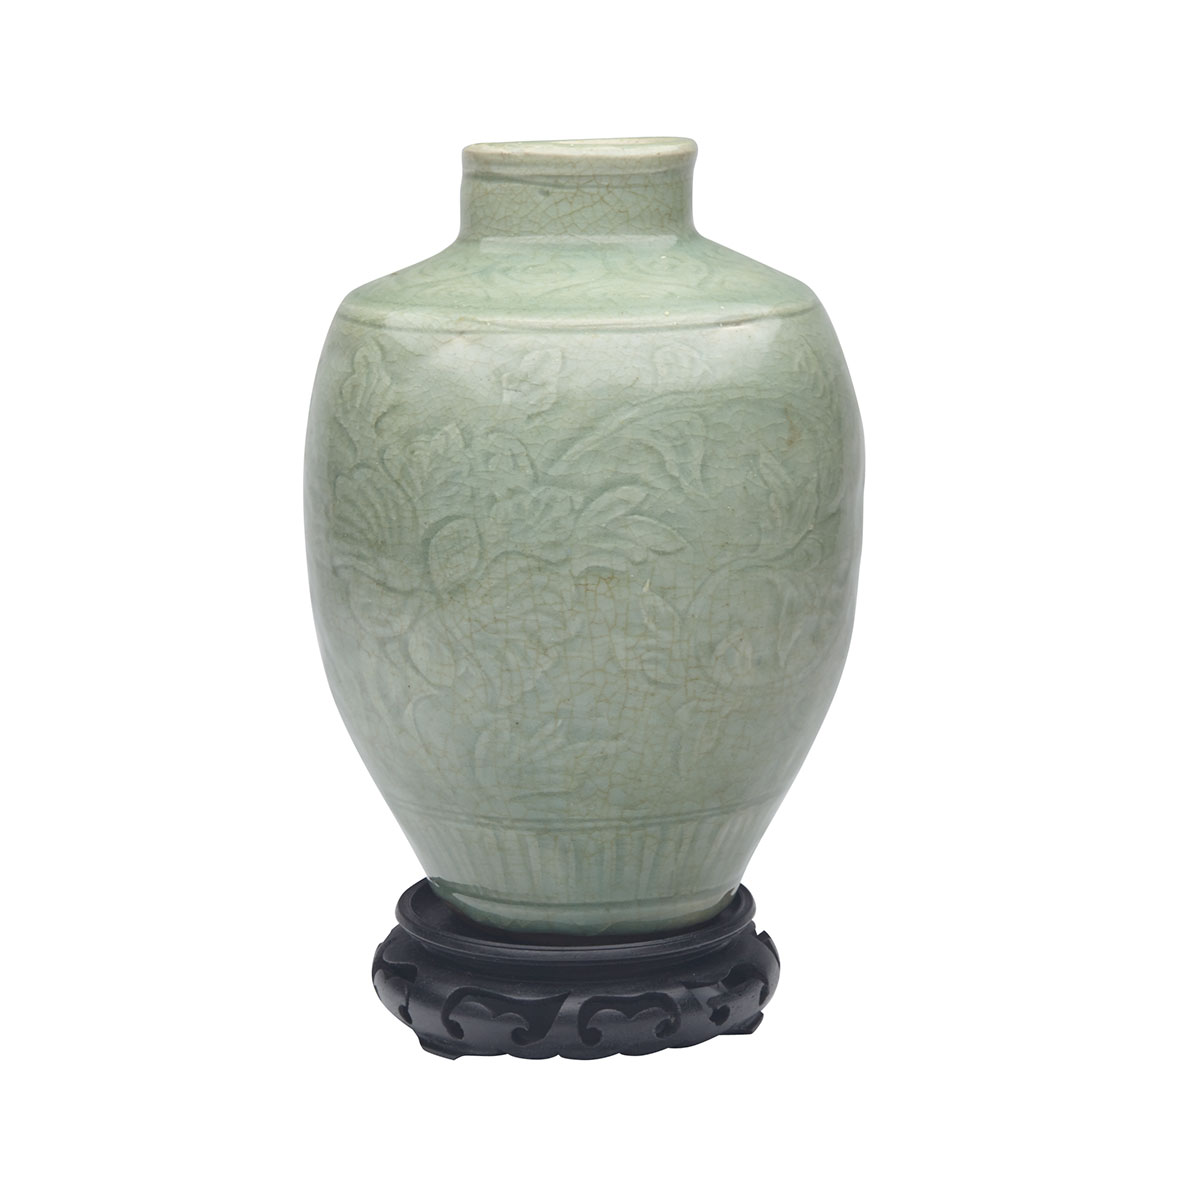 Zheijiang Celadon Jar, 15th/16th Century